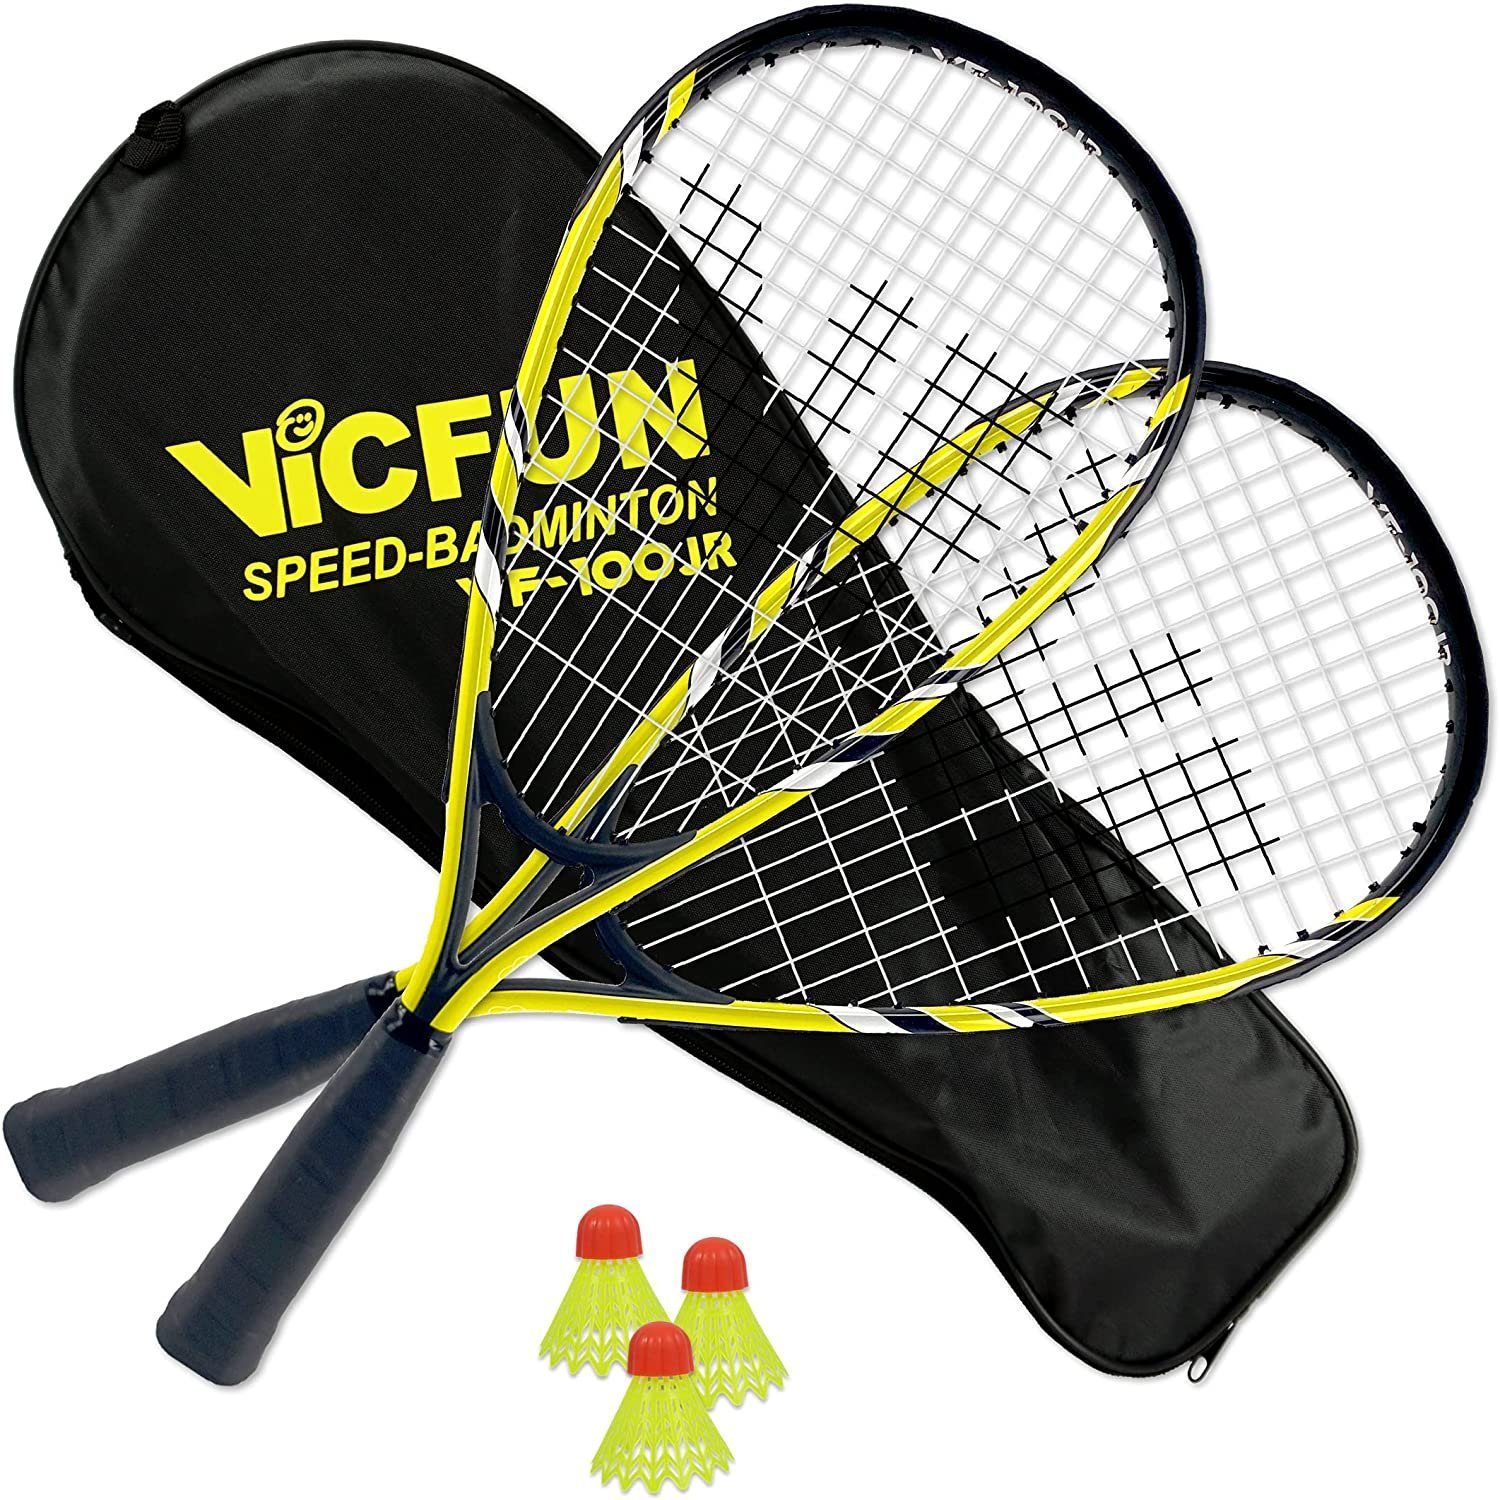 VICFUN Badmintonschläger Speed Badminton Junior 100 gelb/schwarz | Schläger